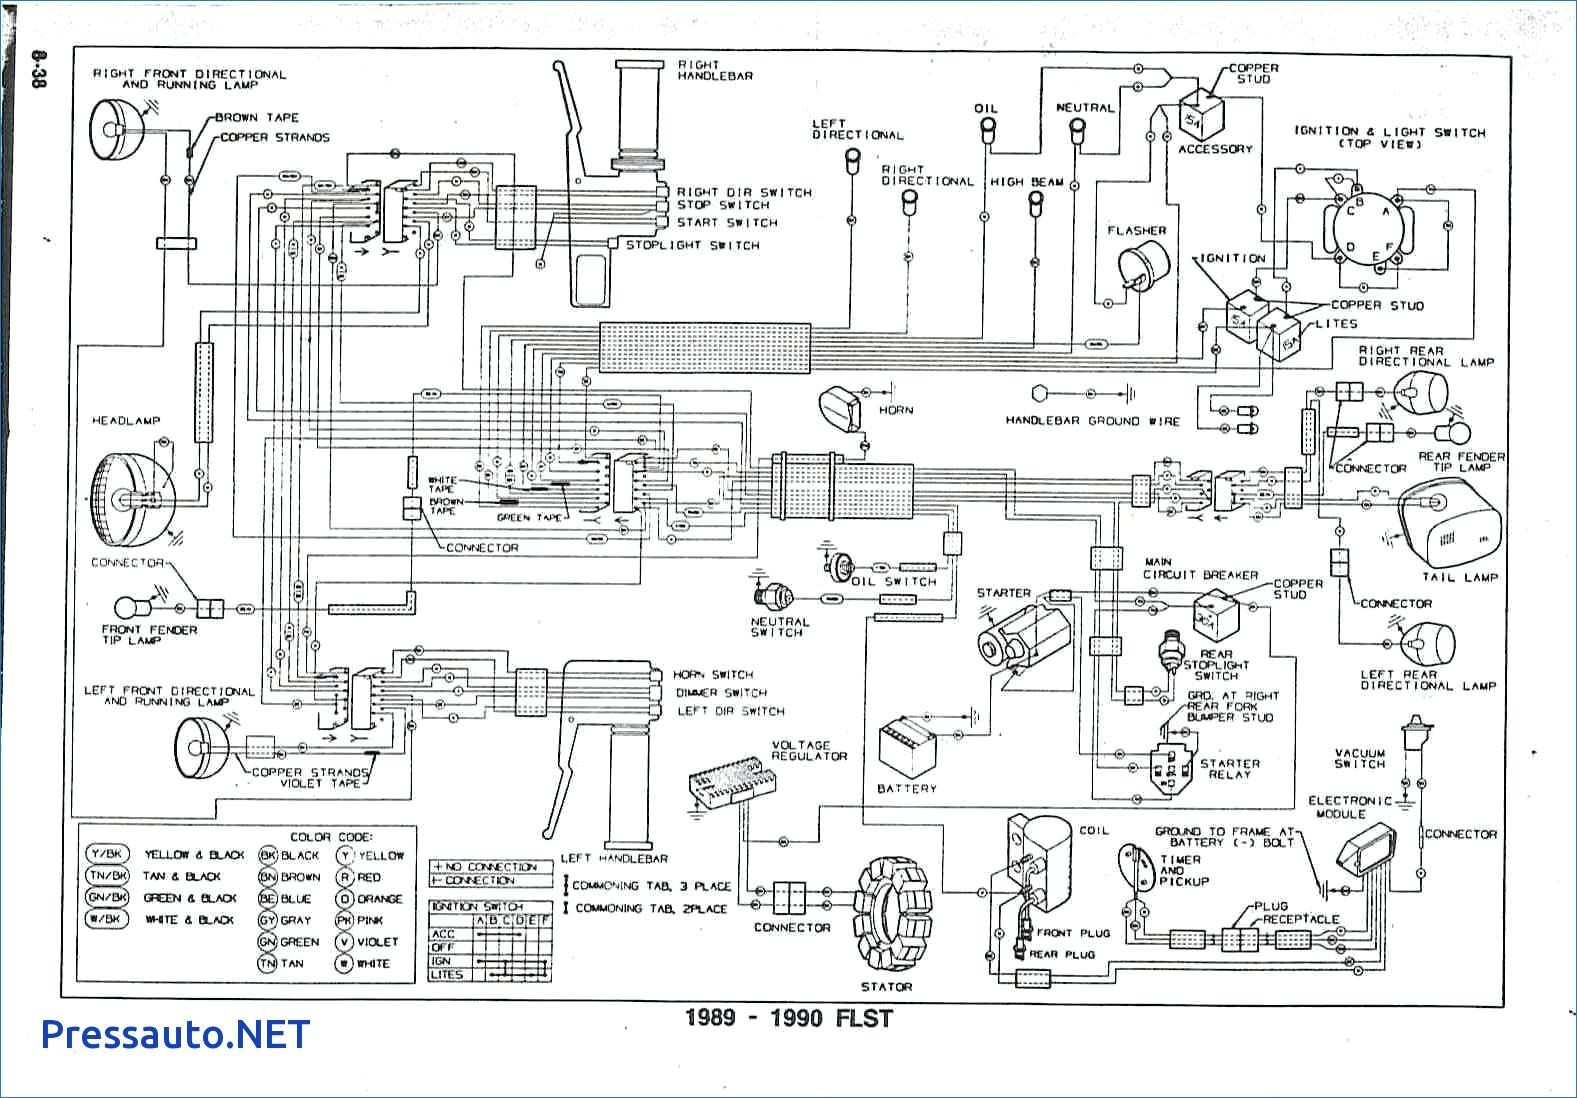 1970 Harley Shovelhead Wiring Diagram Inspirational